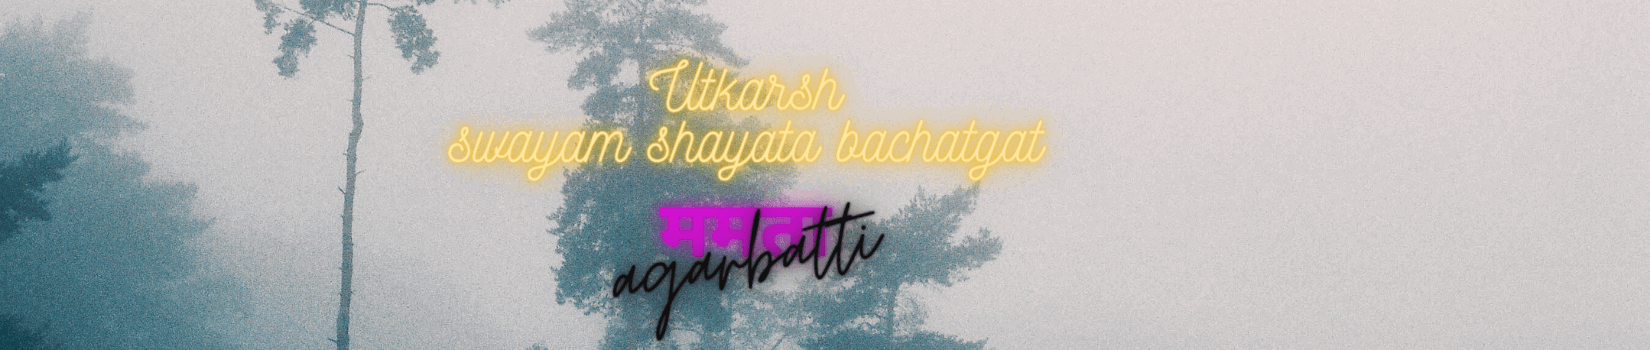 Utkarsh Swayam Sahayata Mahila Bachat Gat (ममता अगरबत्ती)